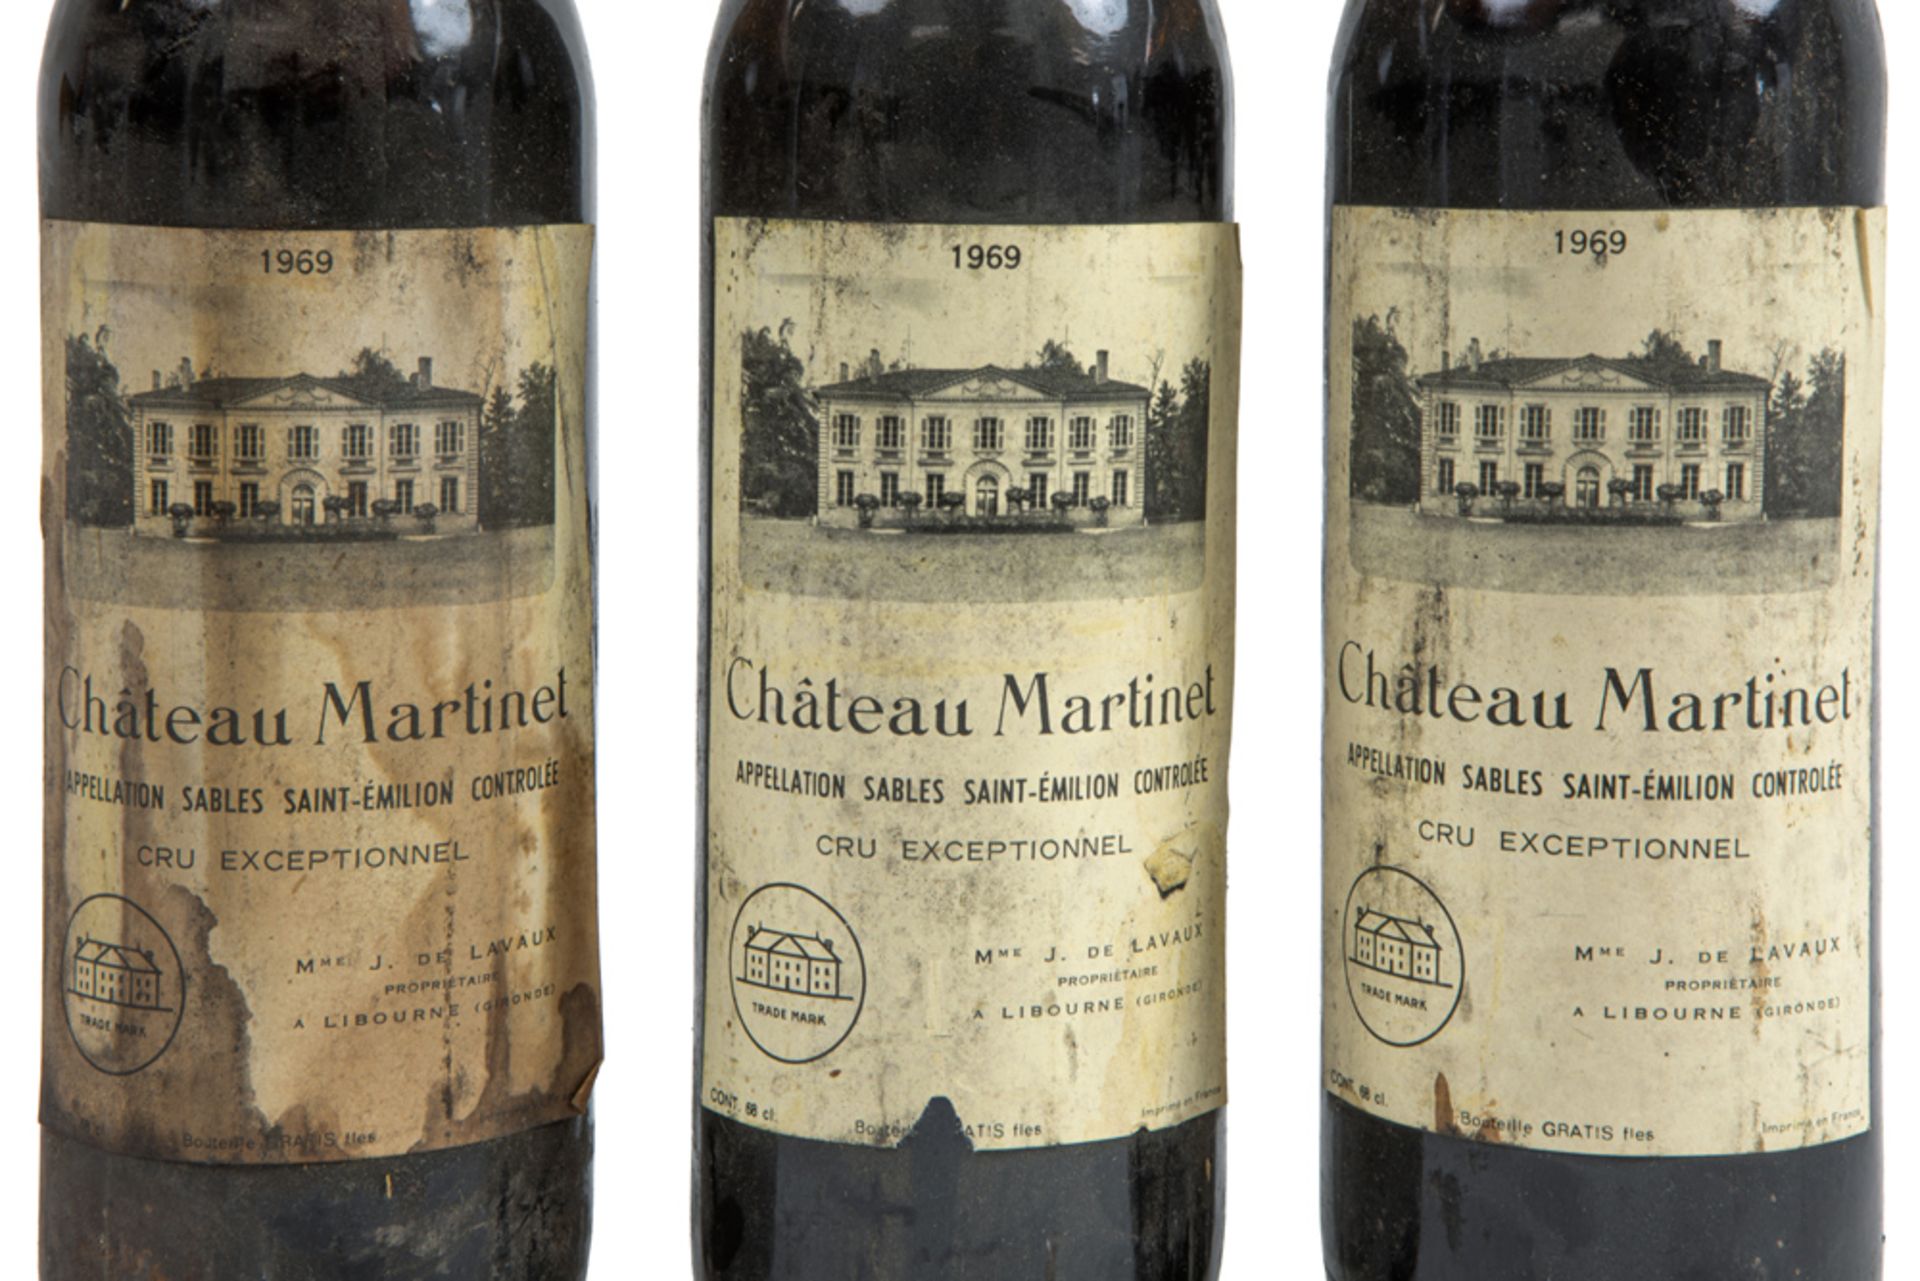 7 bottles of wine || Lot van 7 flessen kasteelwijn : - 3 fl "Château Martinel" (St-Emilion) van 1969 - Image 2 of 3